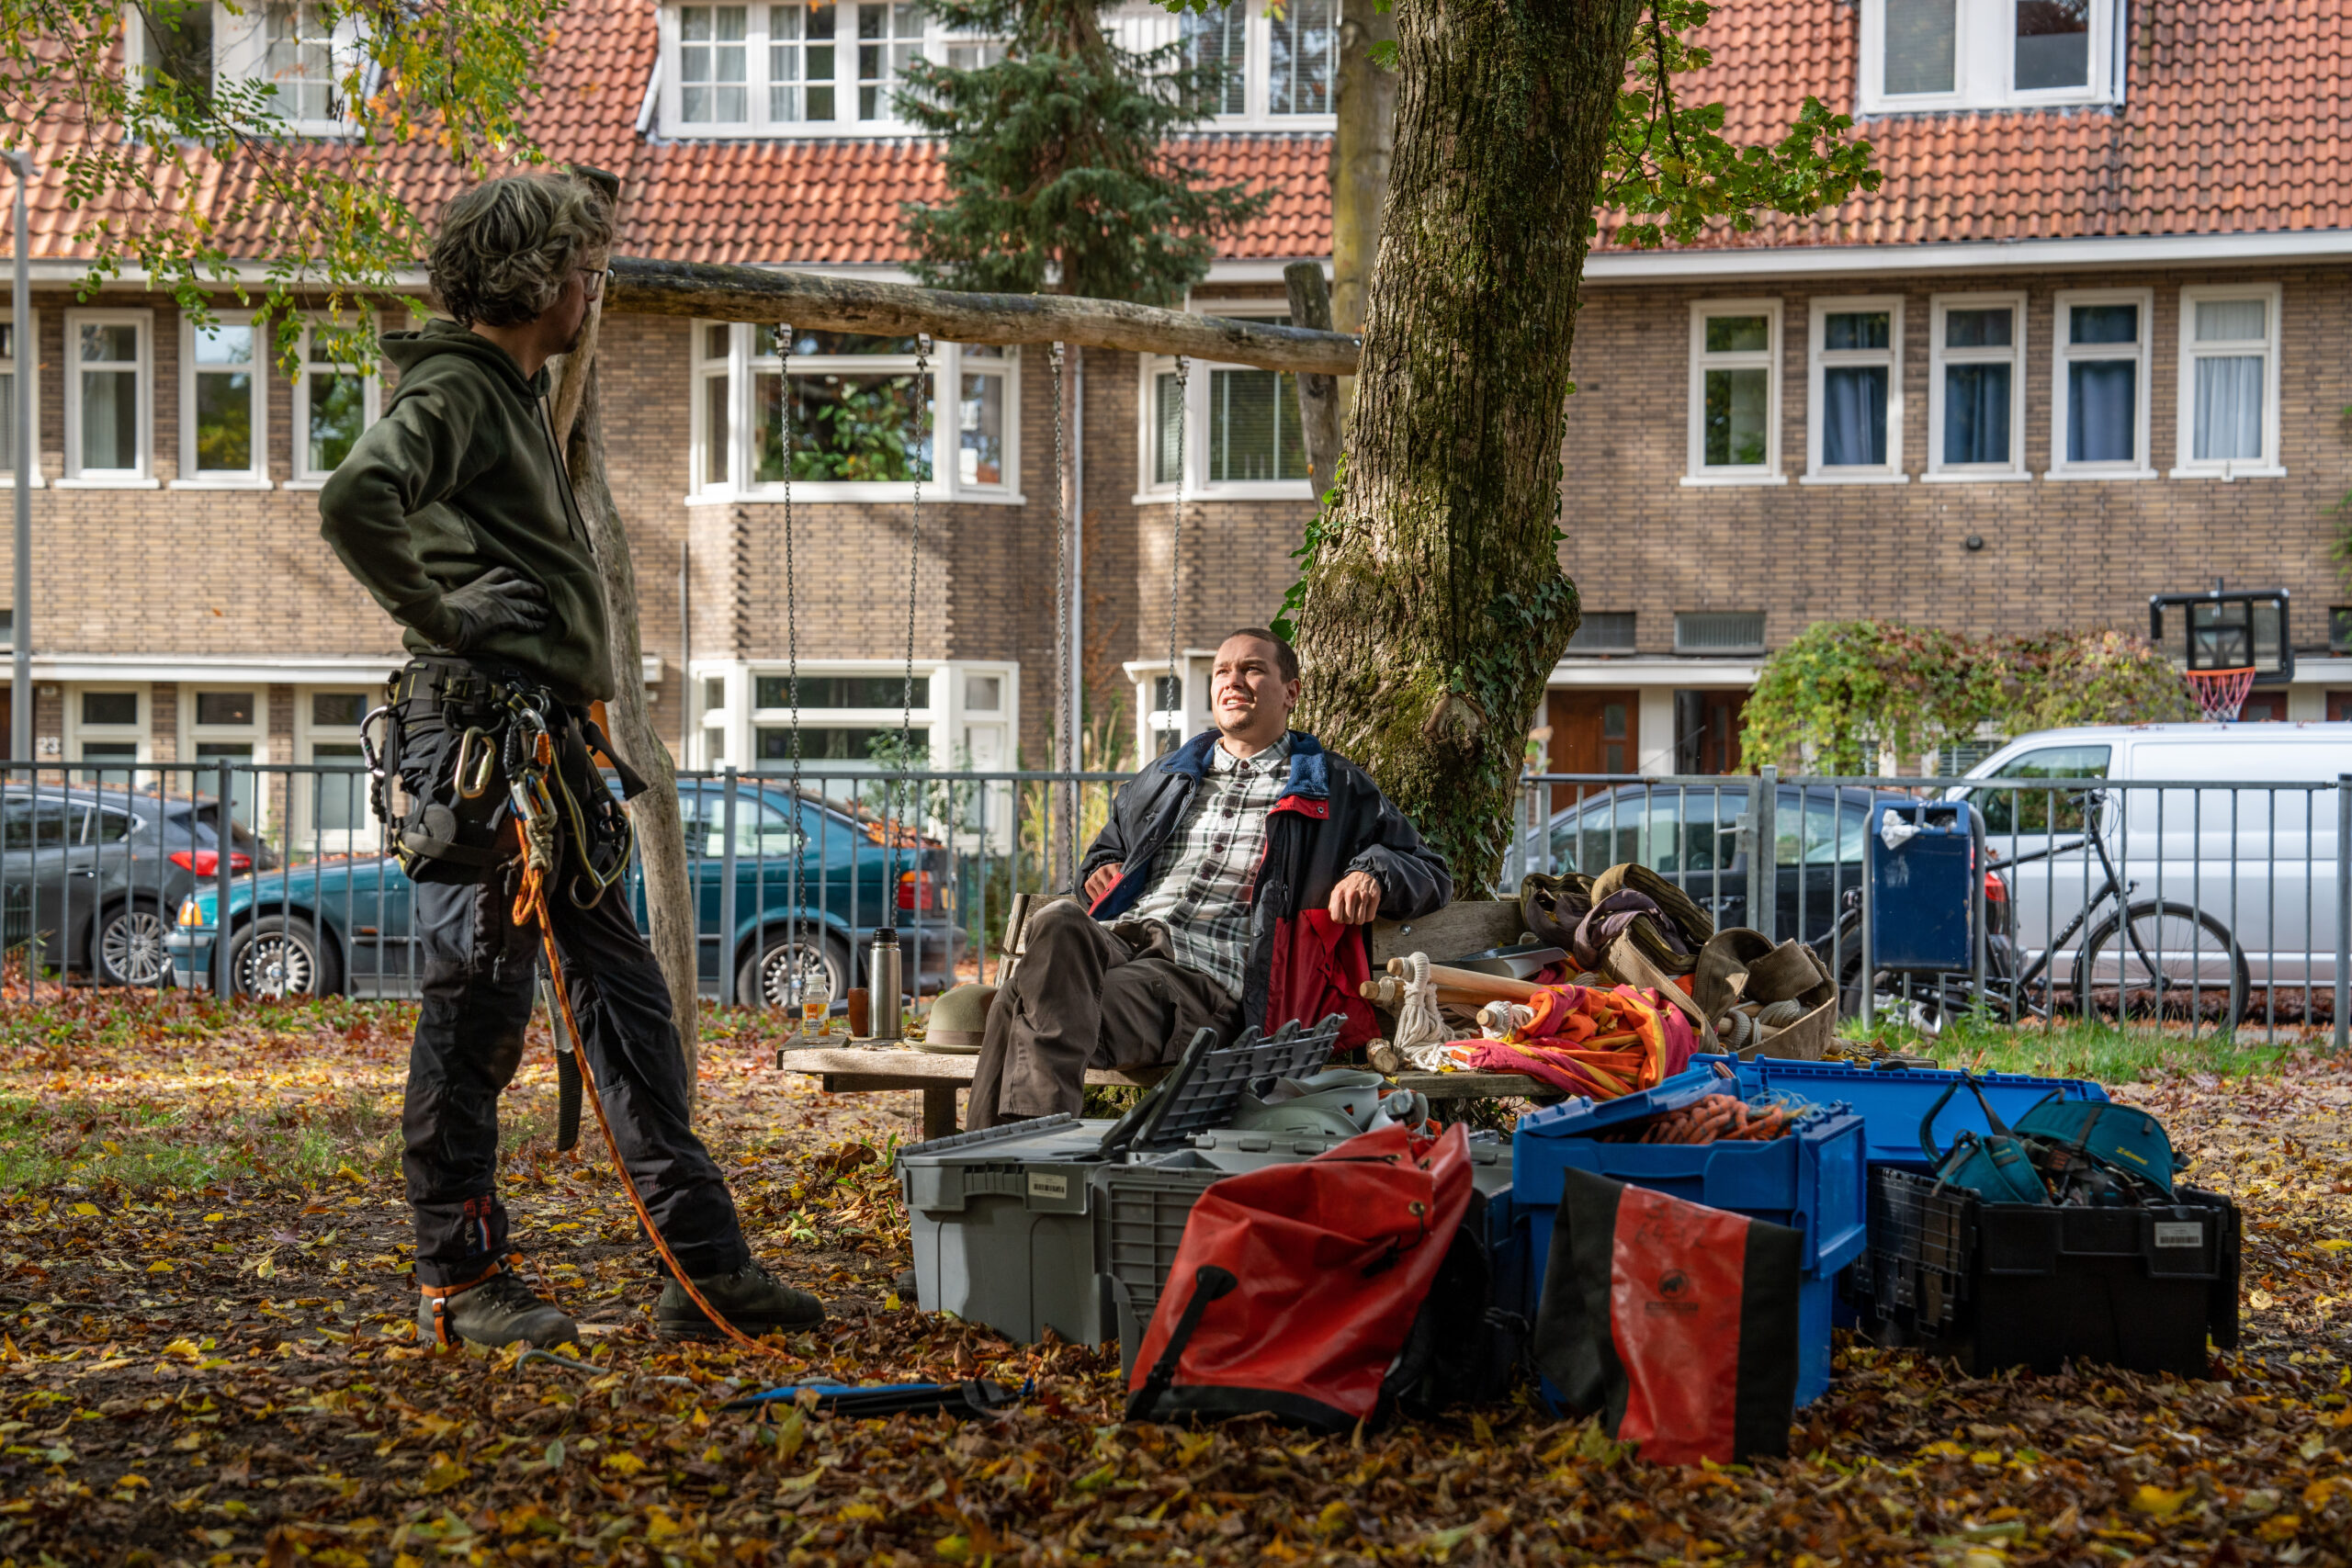 Foto's Erik Vos, Klimworkshop Stadsboswachter, bomen Beleven provincie Gelderland